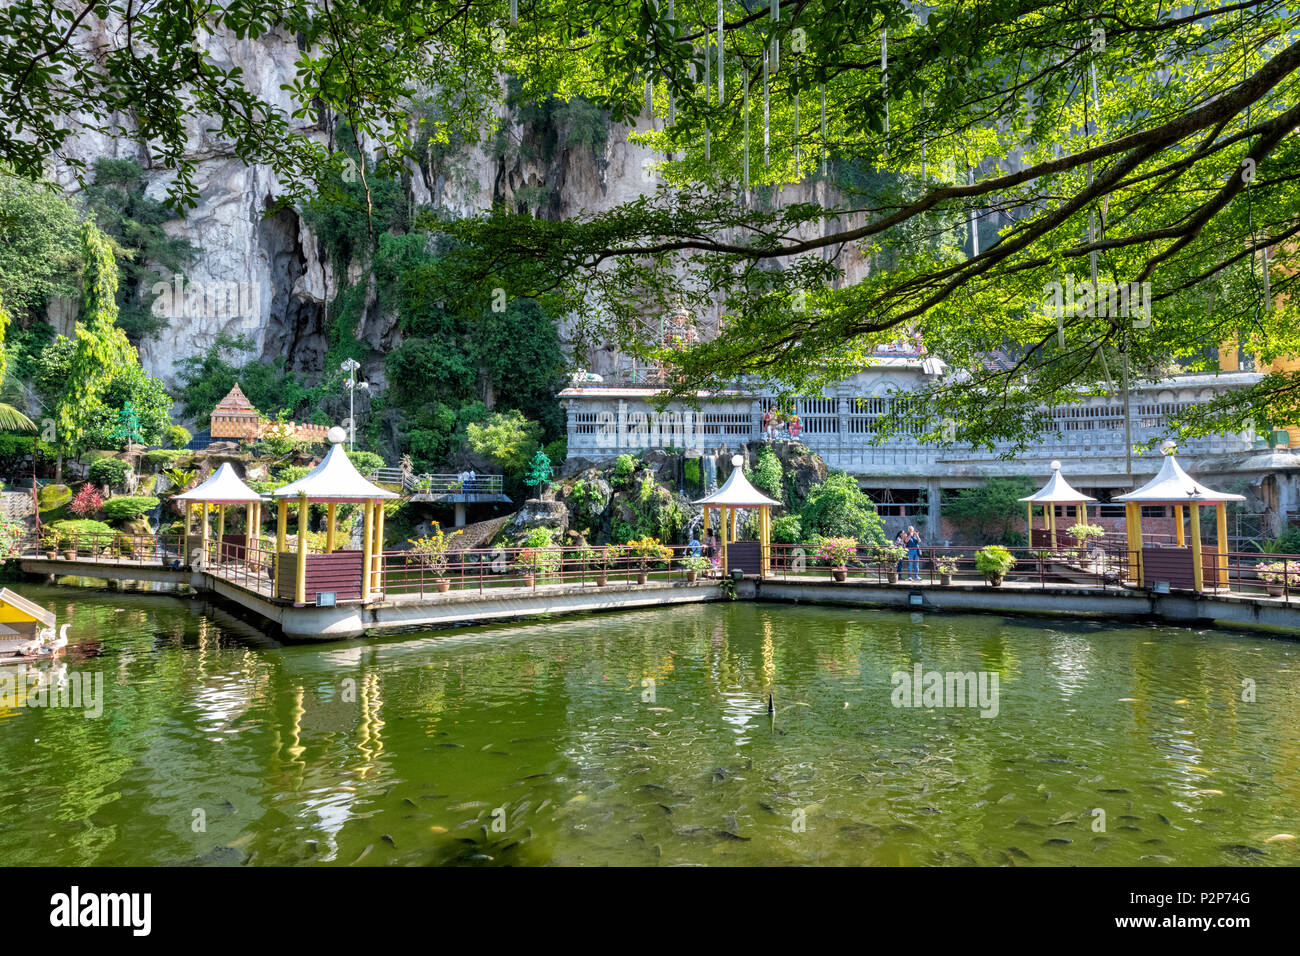 Water garden at the Hindu Temple at the Batu Caves at Gombak near Kuala Lumpur, Malaysia Stock Photo